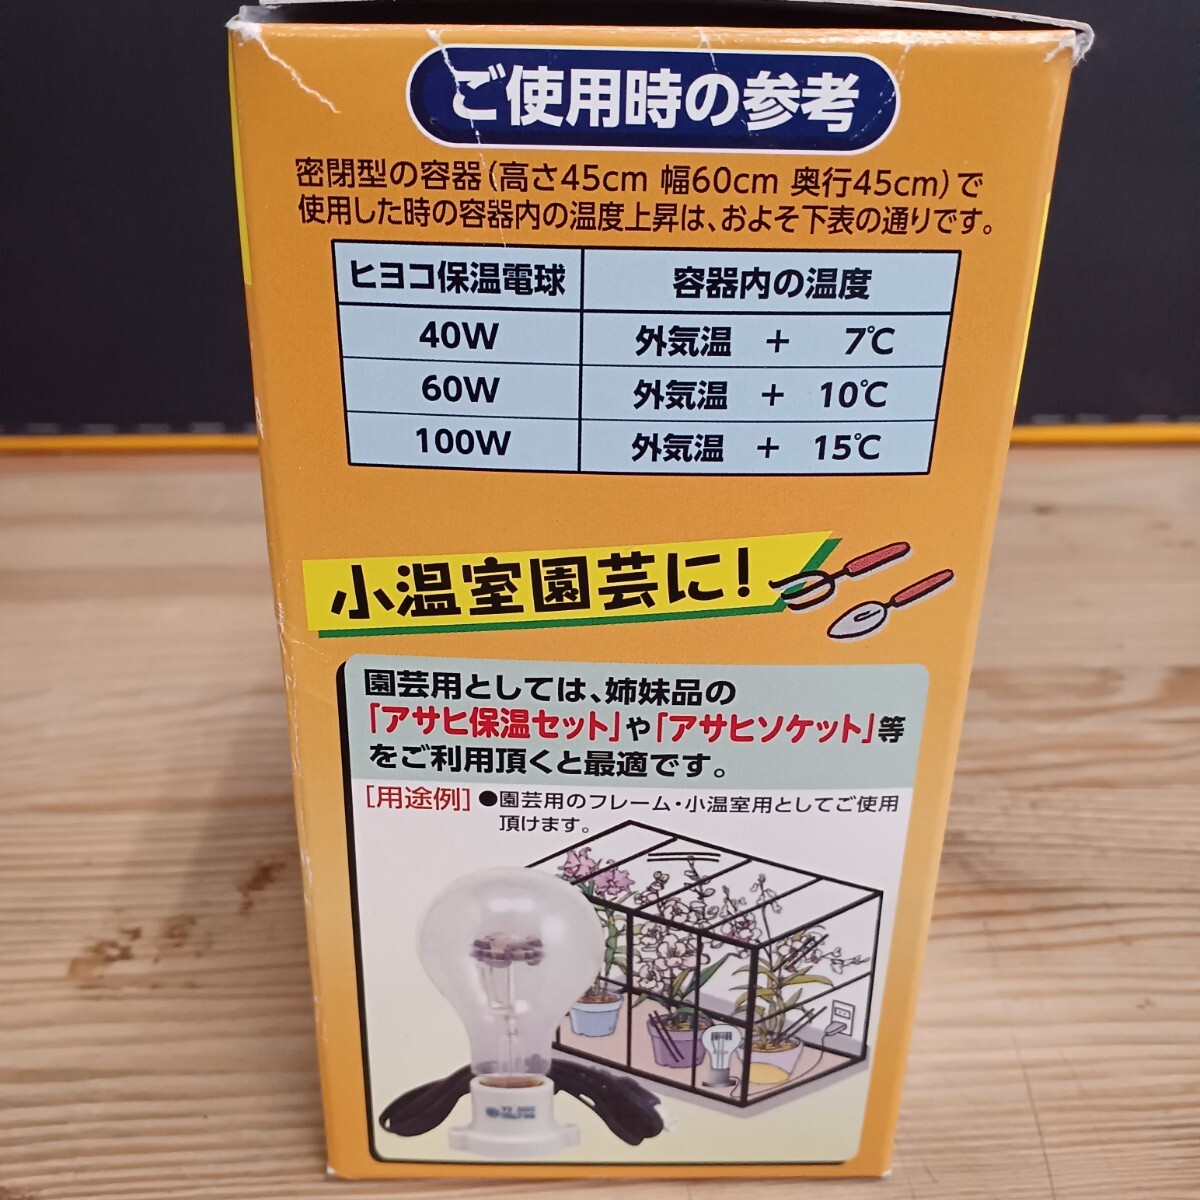  Asahi hi width heat insulation lamp AC100V 40W 3 piece set small animals small greenhouse gardening unused storage goods 